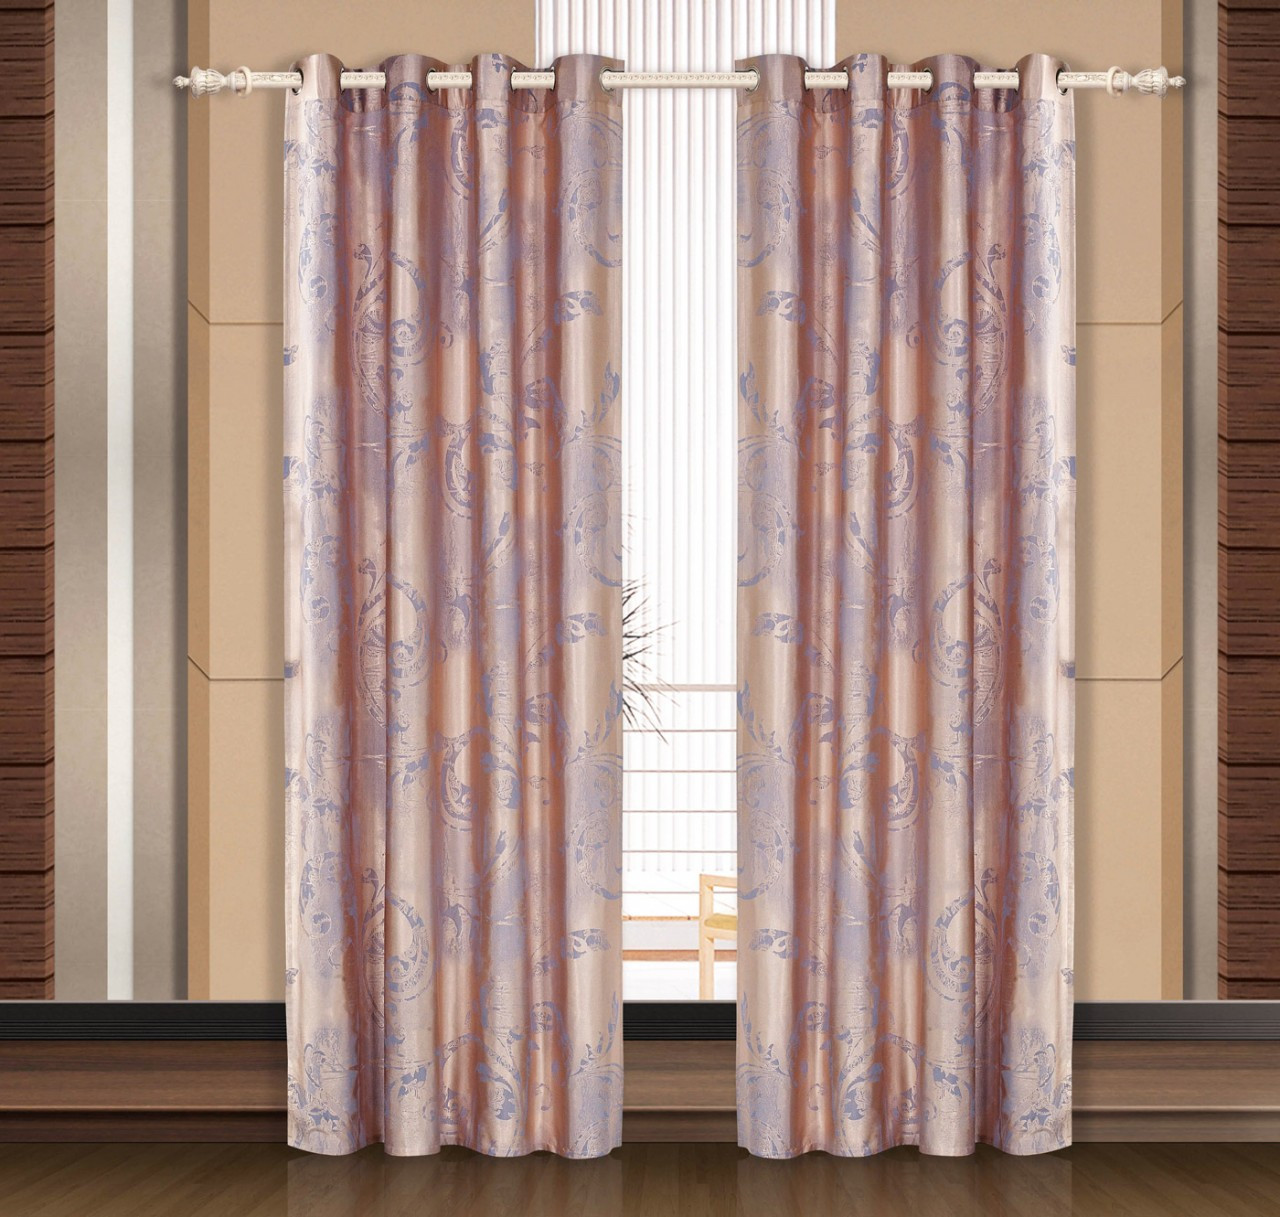 DMC465 Pandora Dolce Mela Window Treatments Drapes Curtain Panel